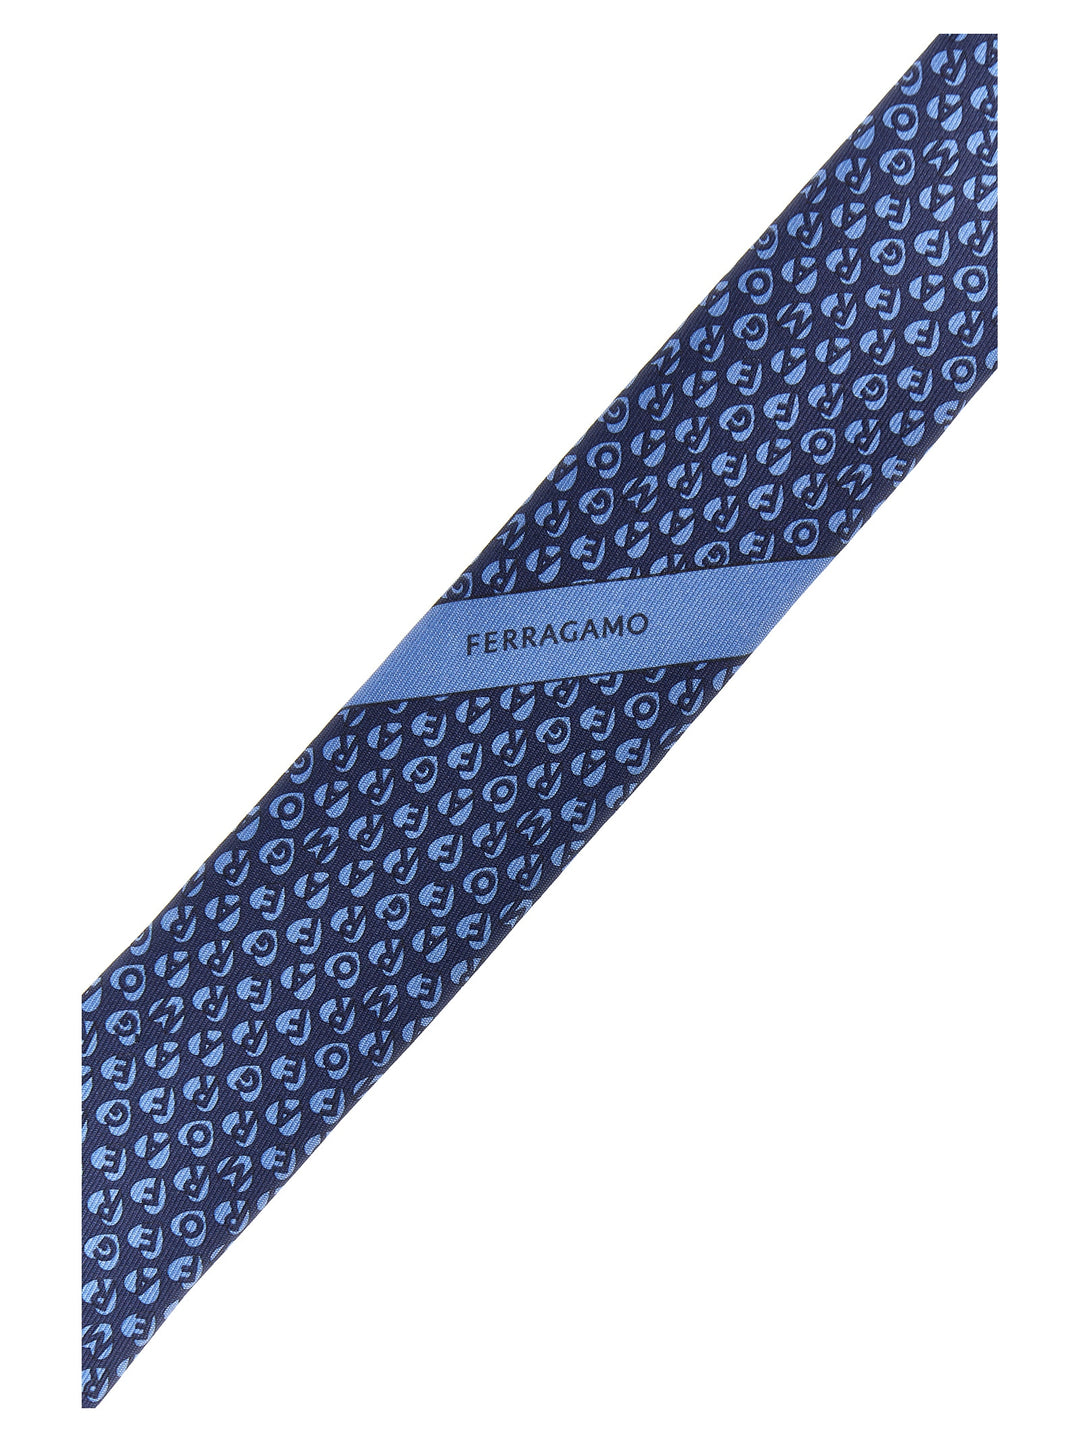 Printed Tie Cravatte Blu